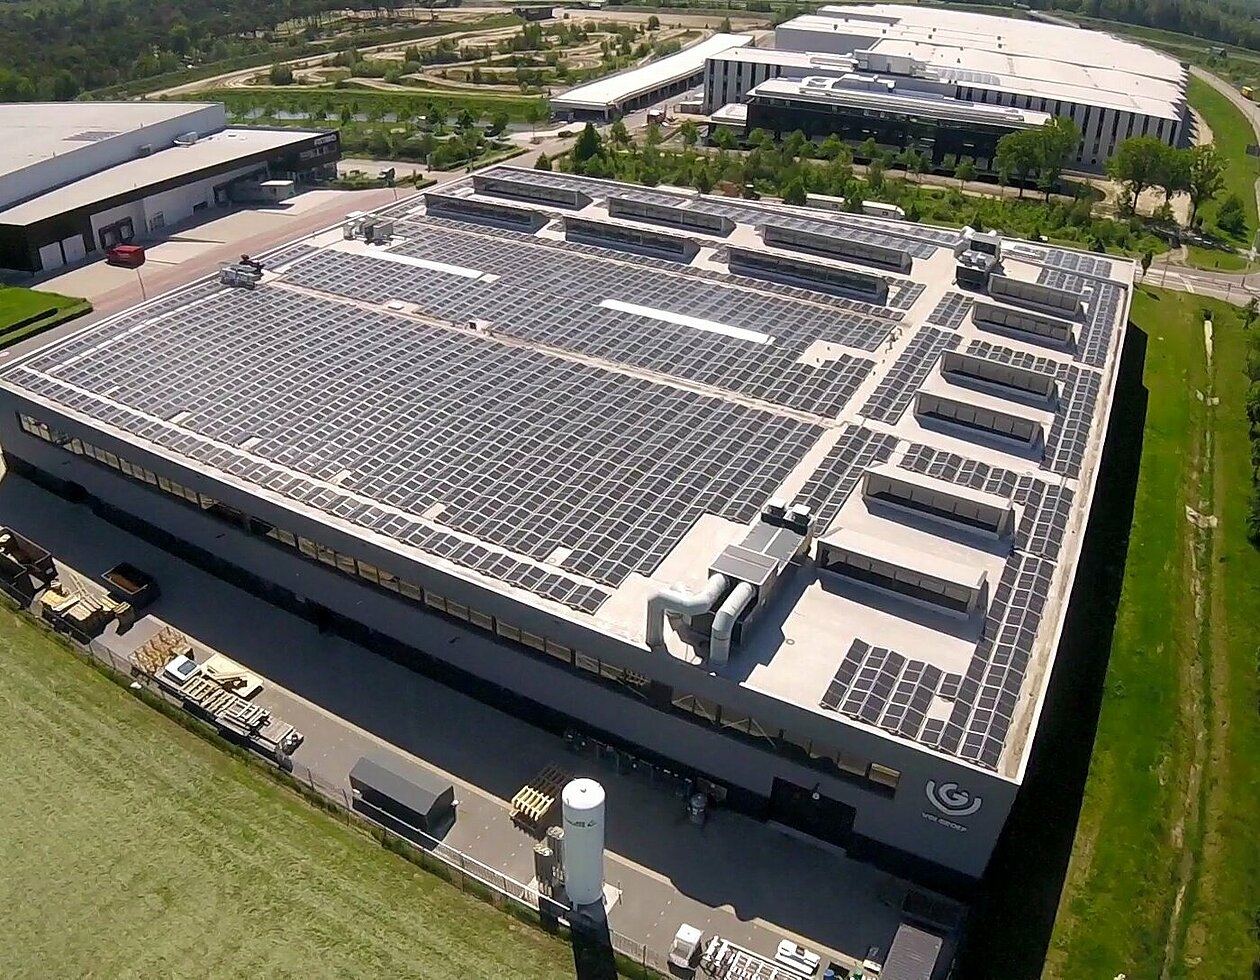 Csm Kempisch Bedrijvenpark Energy Hub Fabriek Volledig Op Zonnestroom Ce5bc39adc